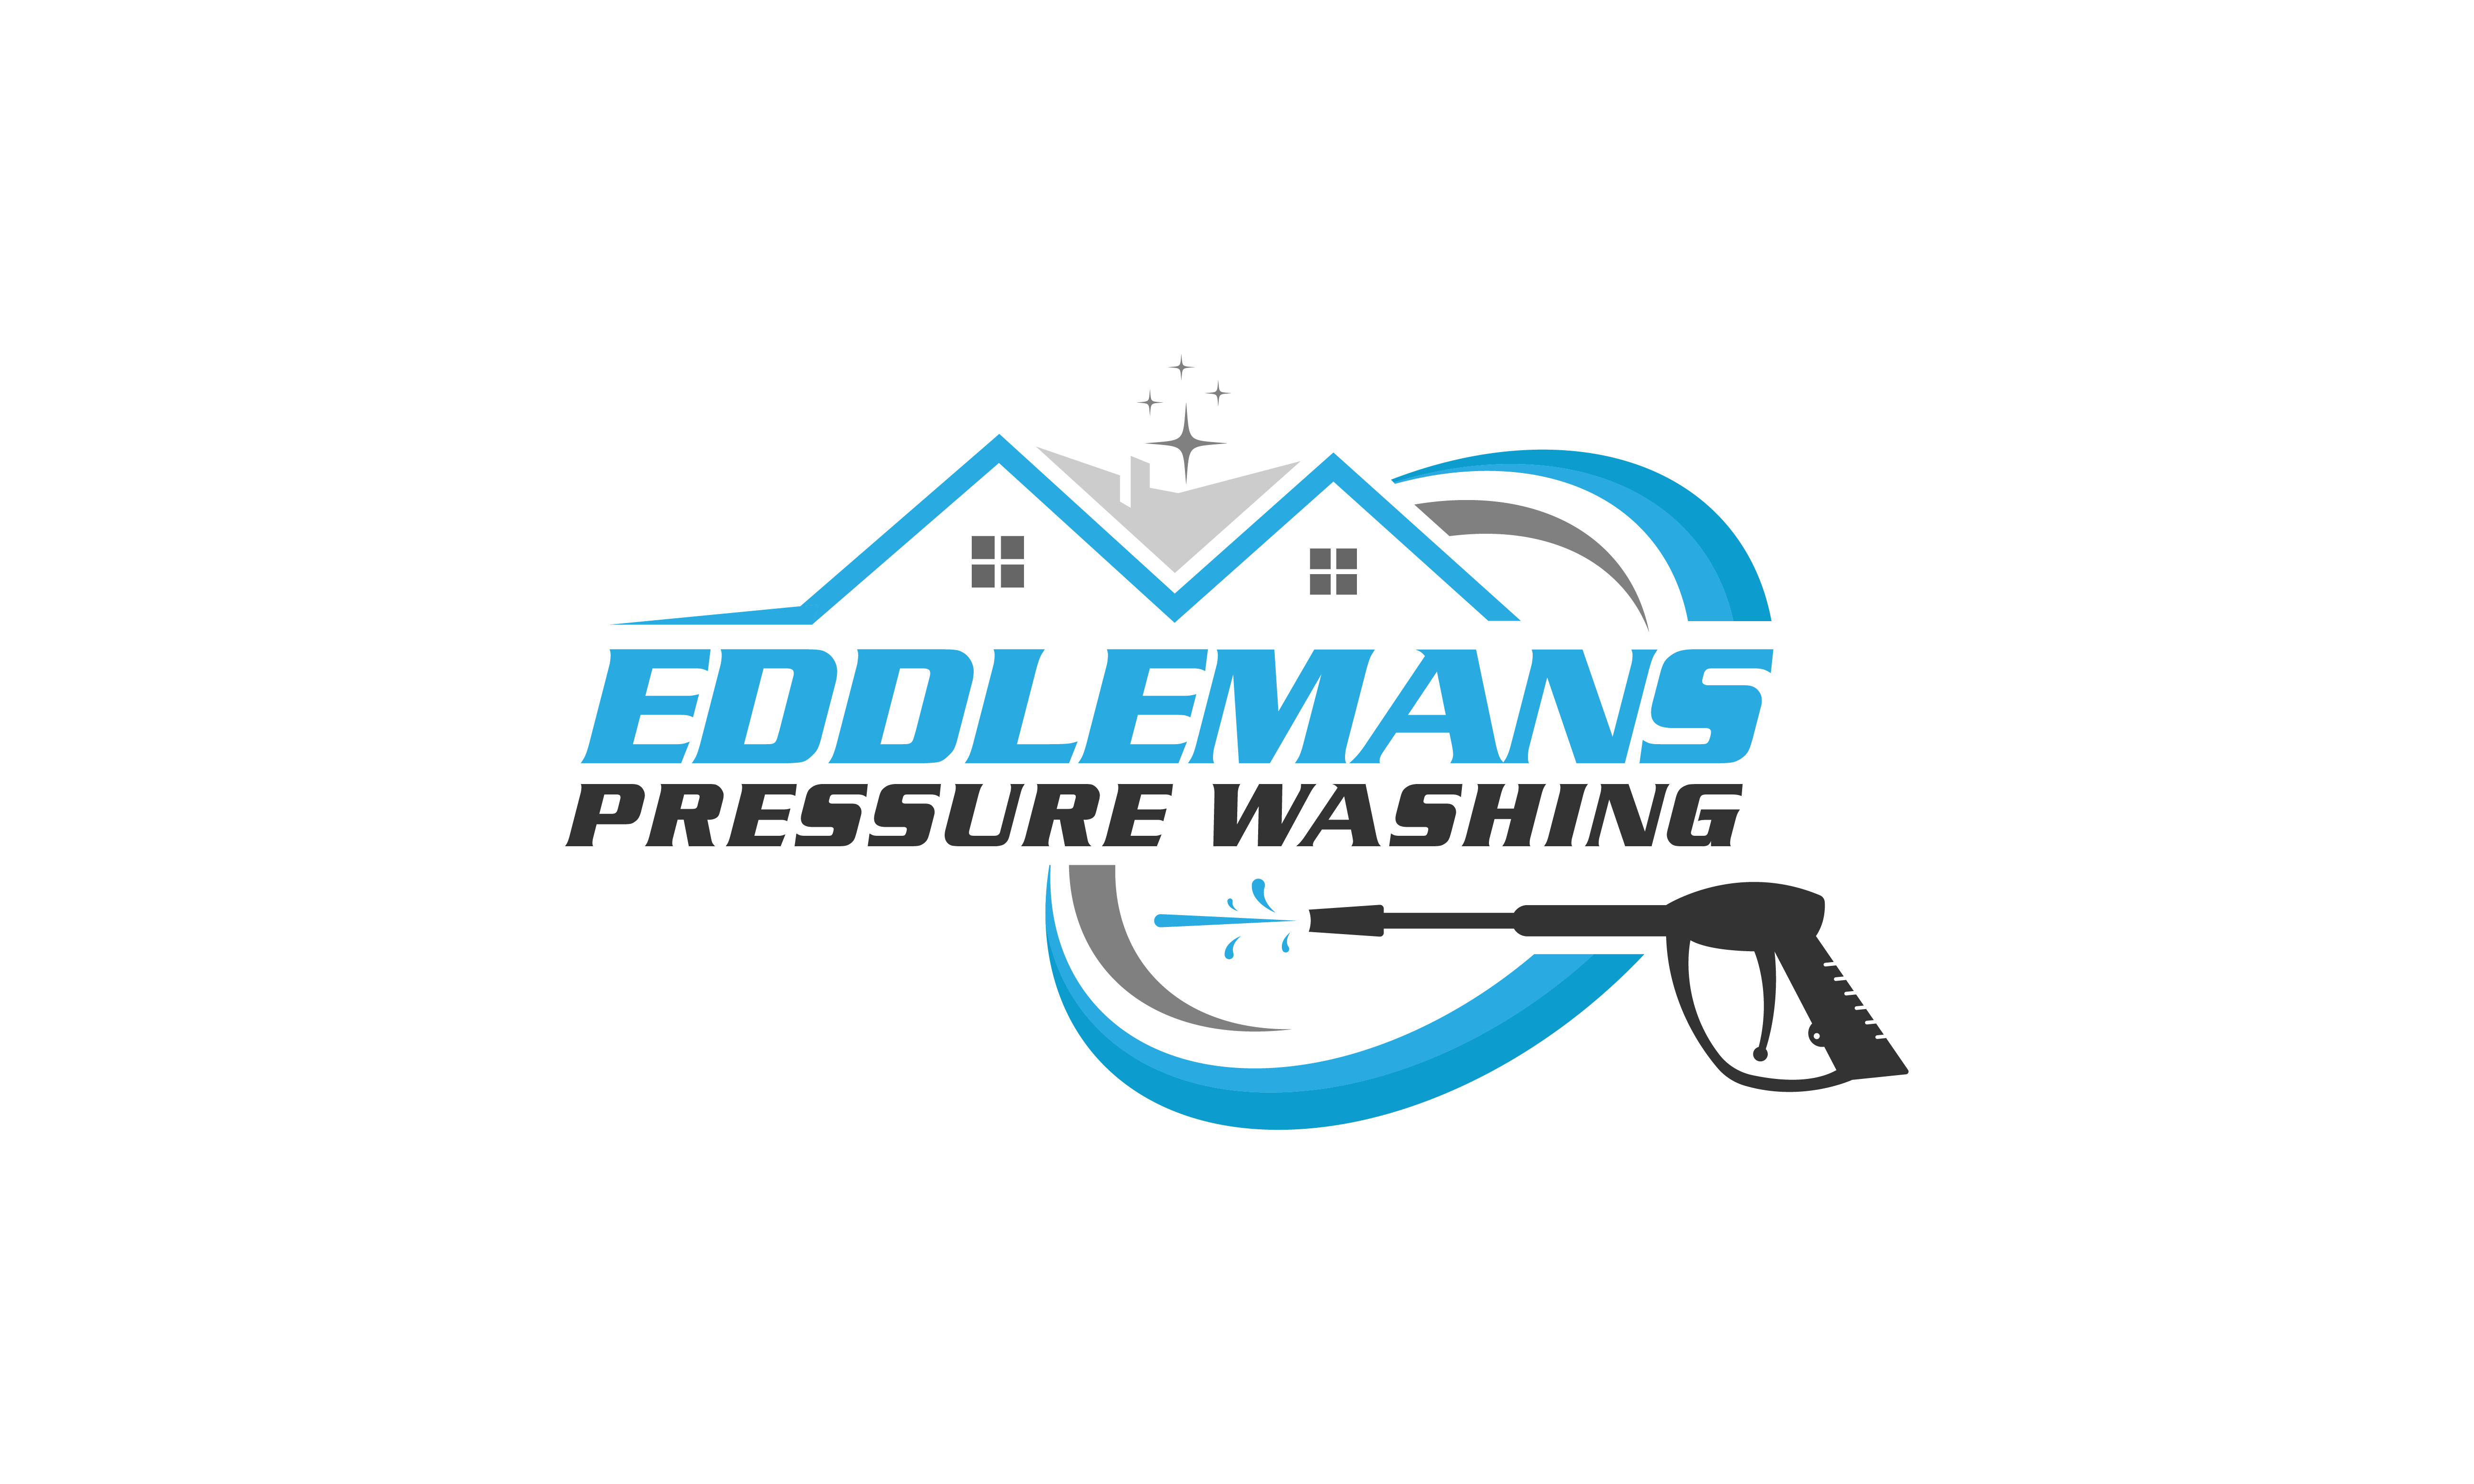 Eddlemans Pressure Washing Logo